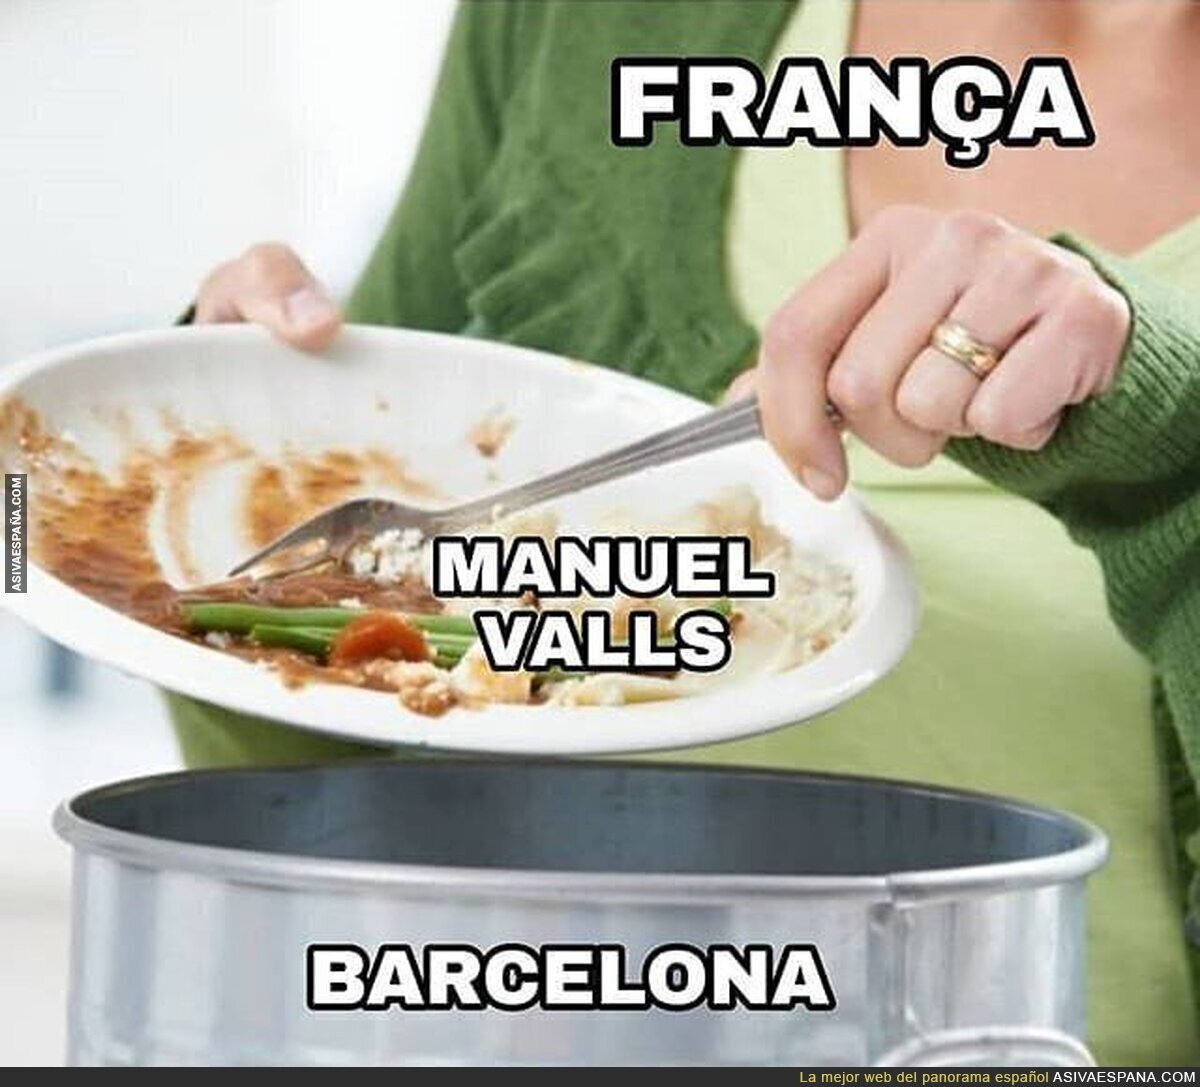 Ada Colau vs Manuel Valls